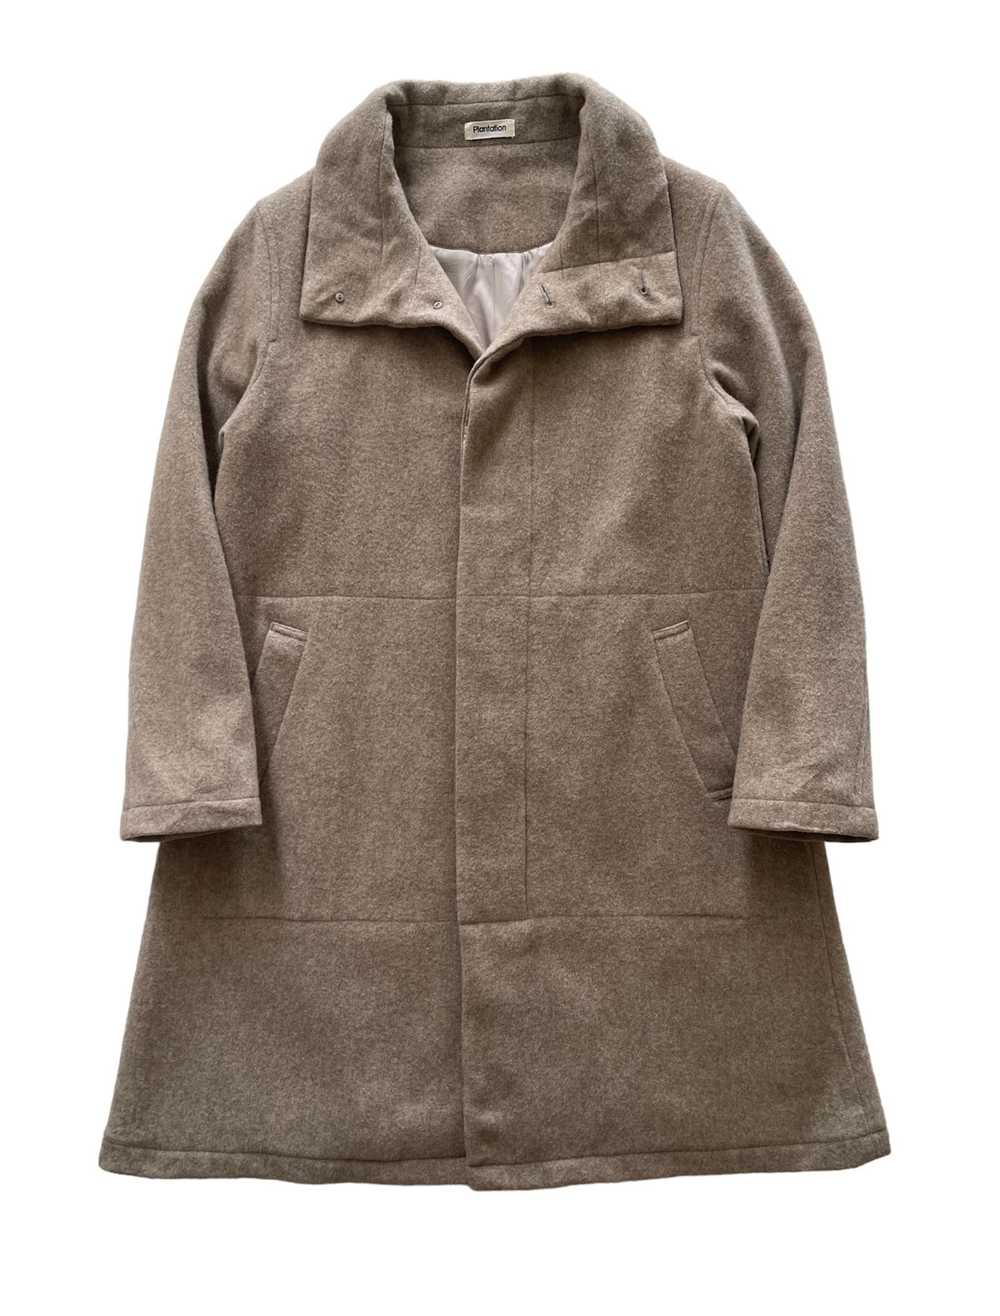 Issey Miyake Issey Miyake Wool Overcoat / Longcoat - image 1